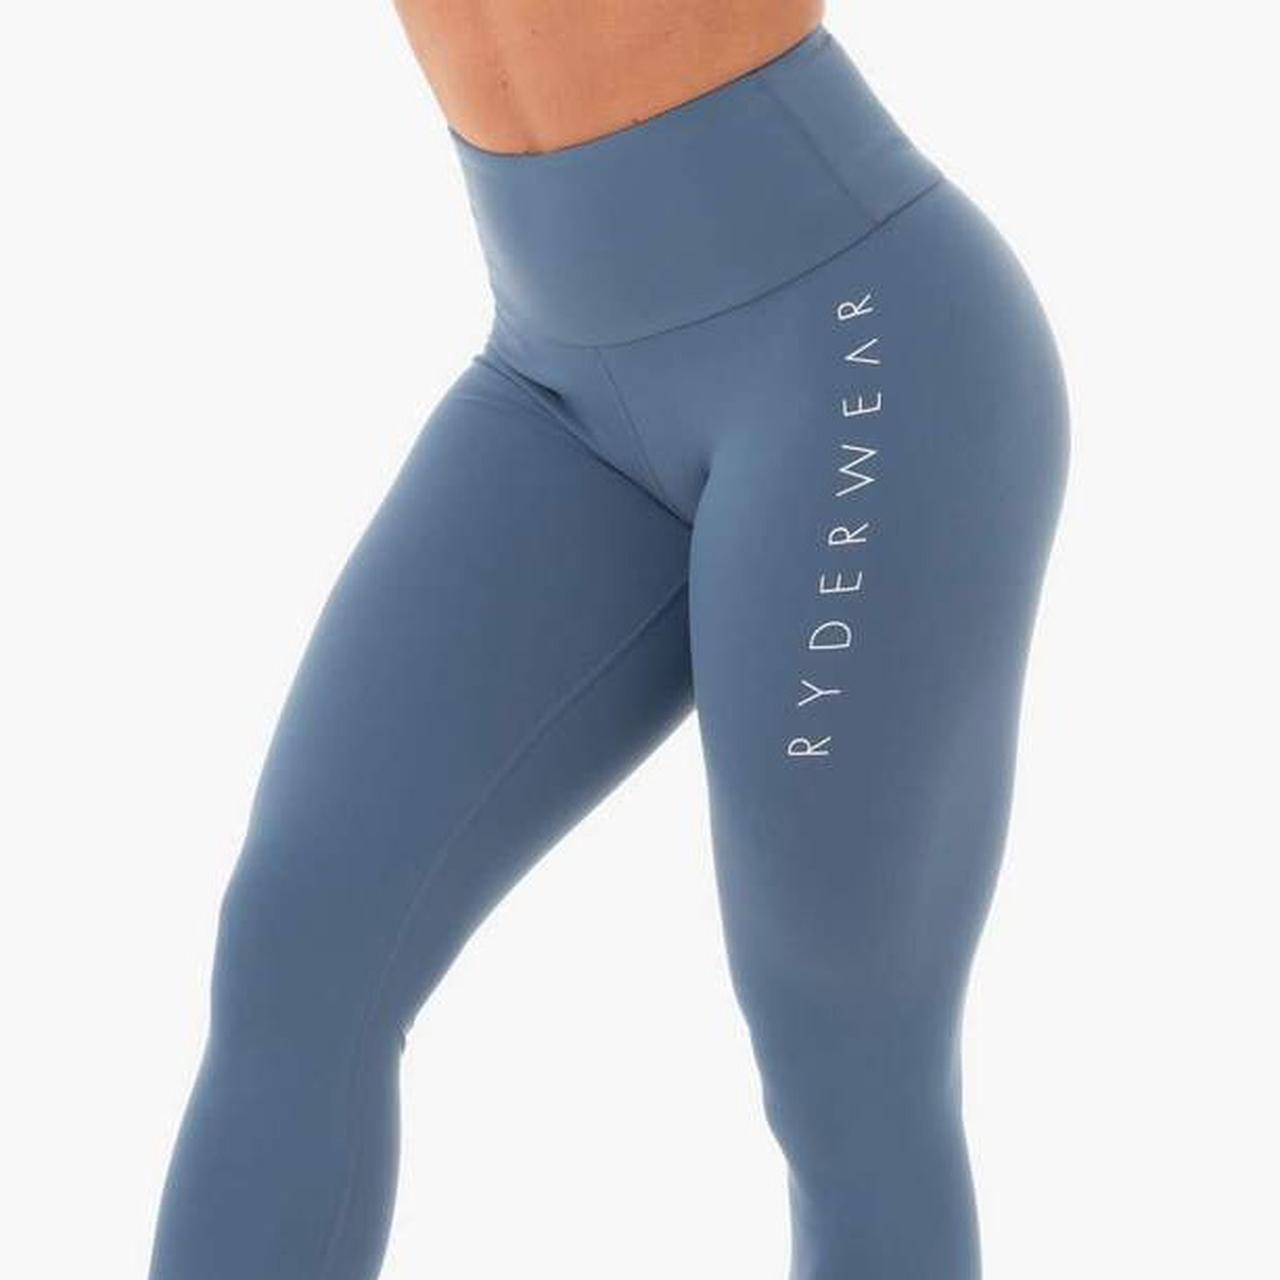 *＊✿❀ Ryderwear gym leggings ❀✿＊* •Steel blue